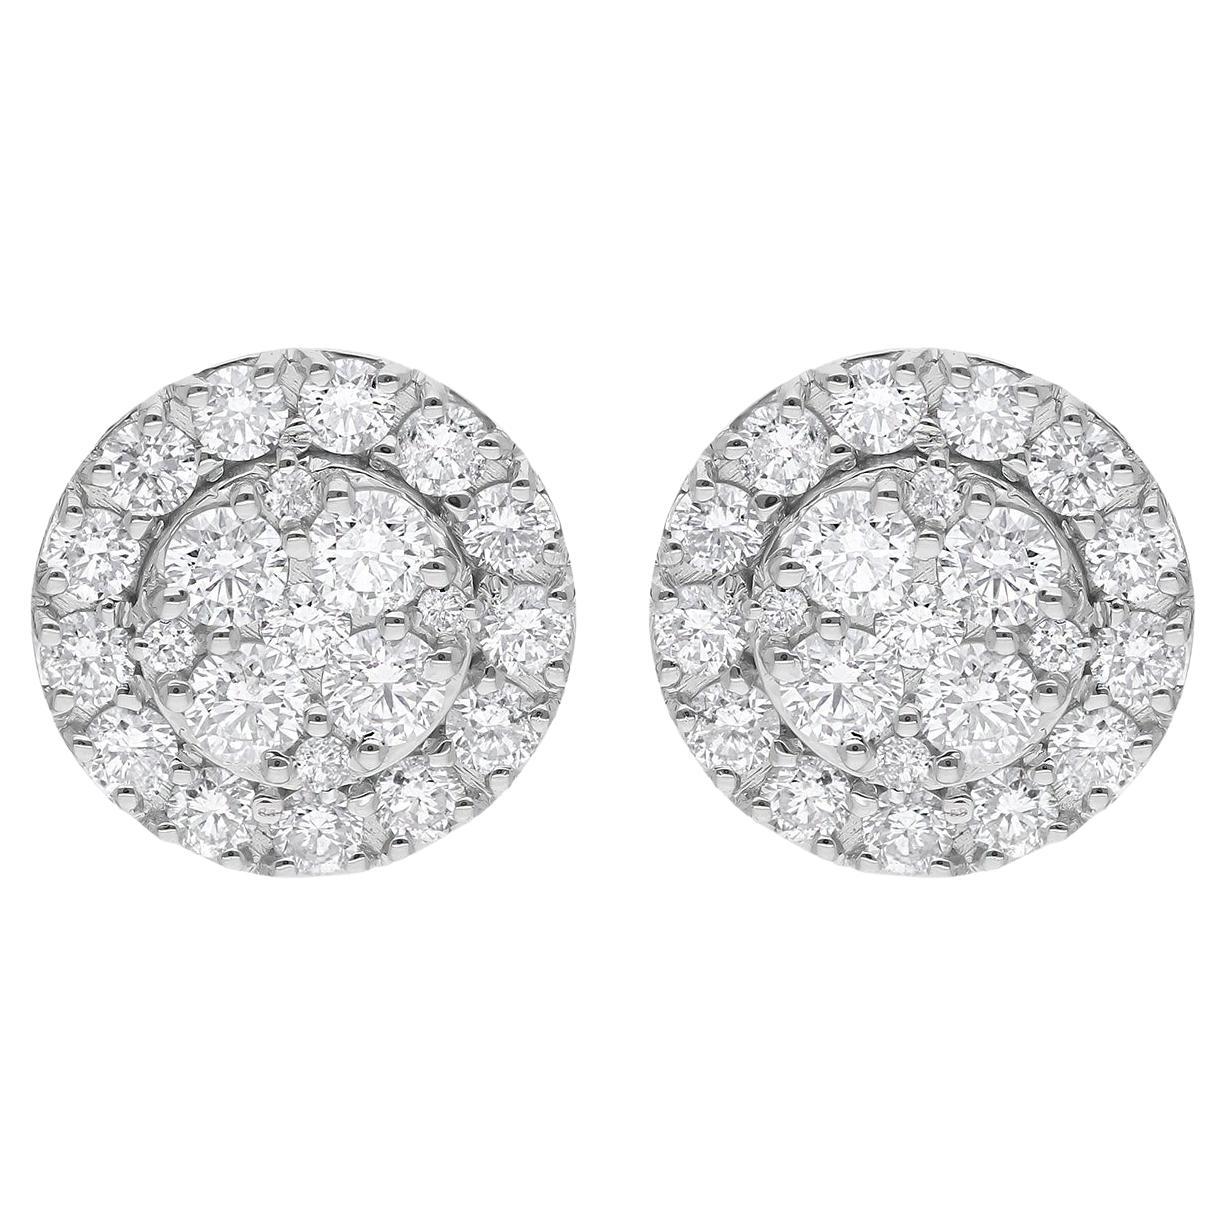 1.97 Carat SI Clarity HI Color Round Diamond Stud Earrings 18 Karat White Gold